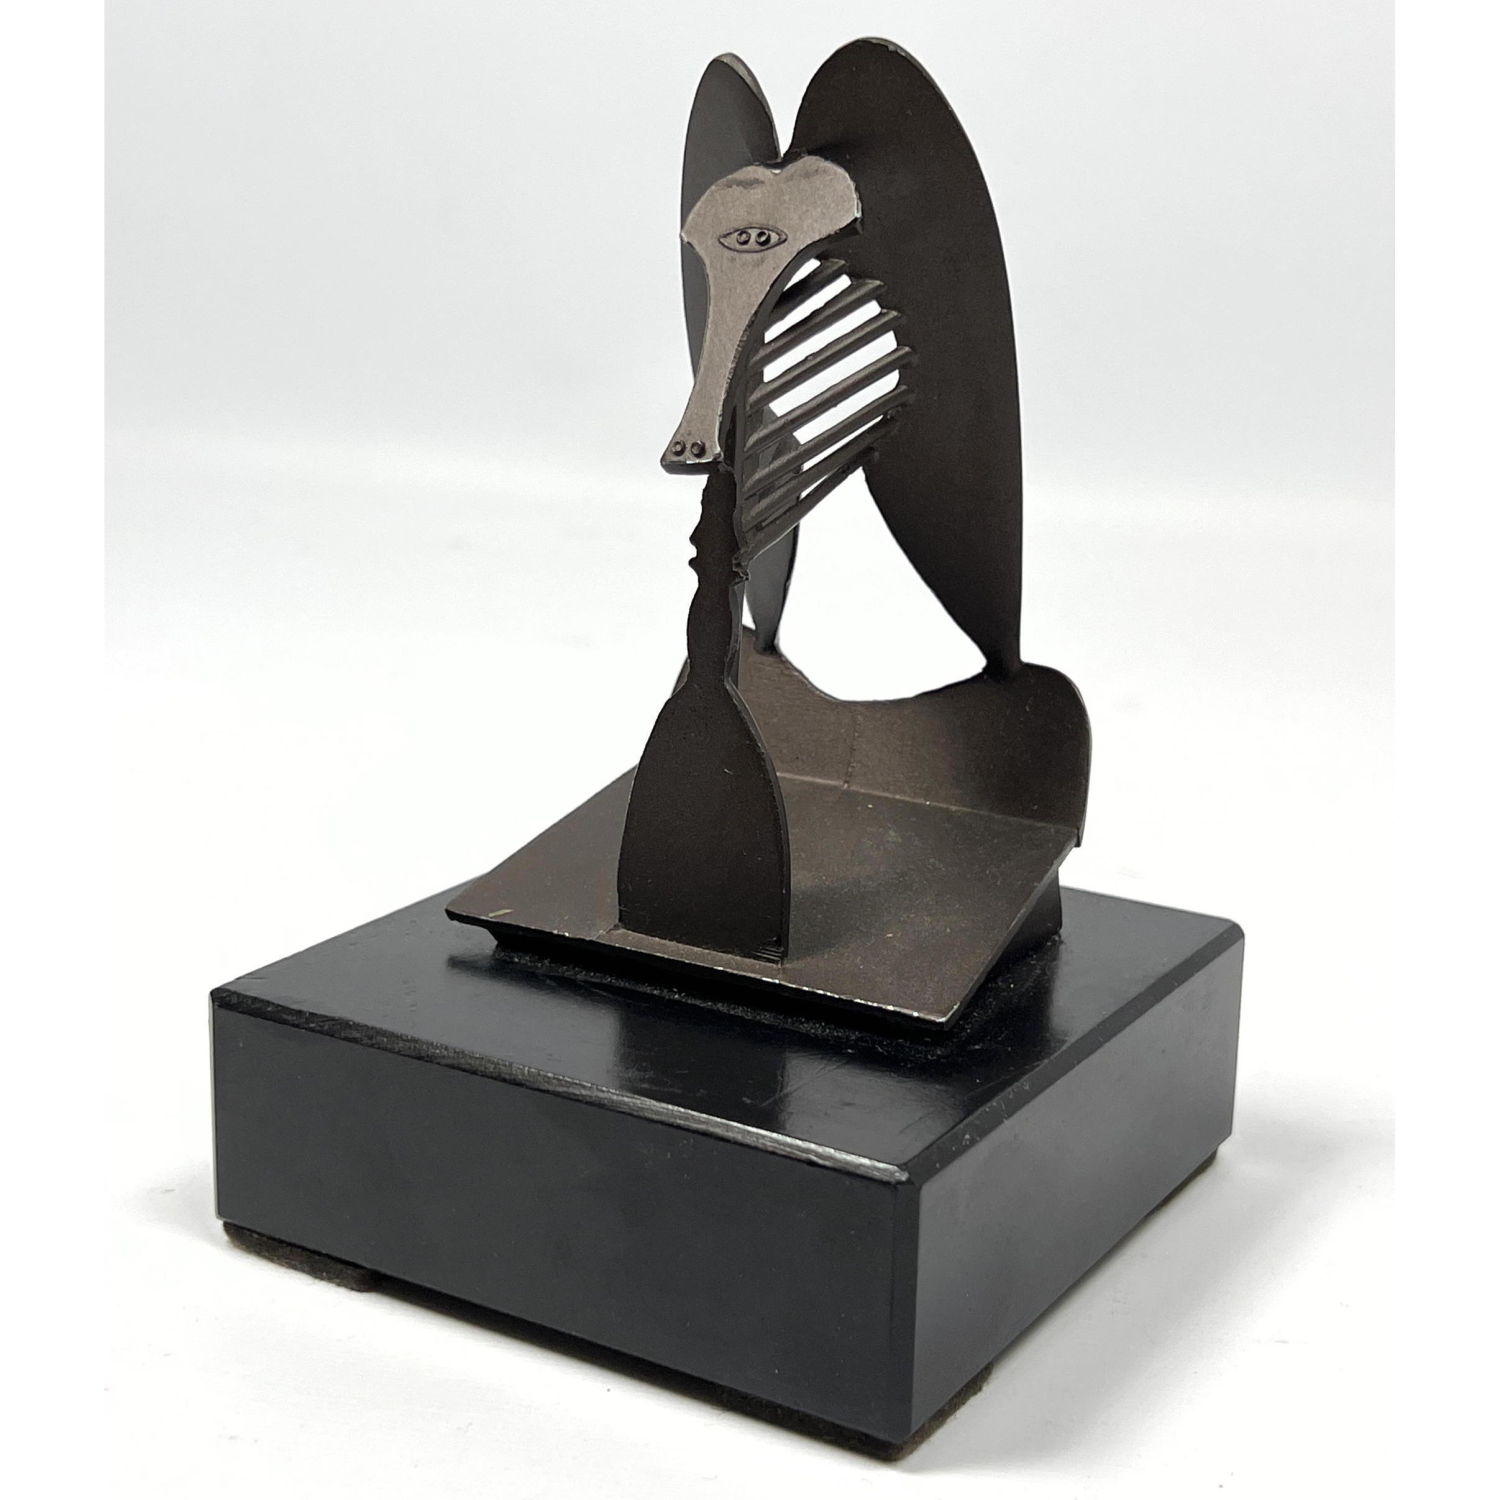 Chicago Picasso Model SculptureMarked: